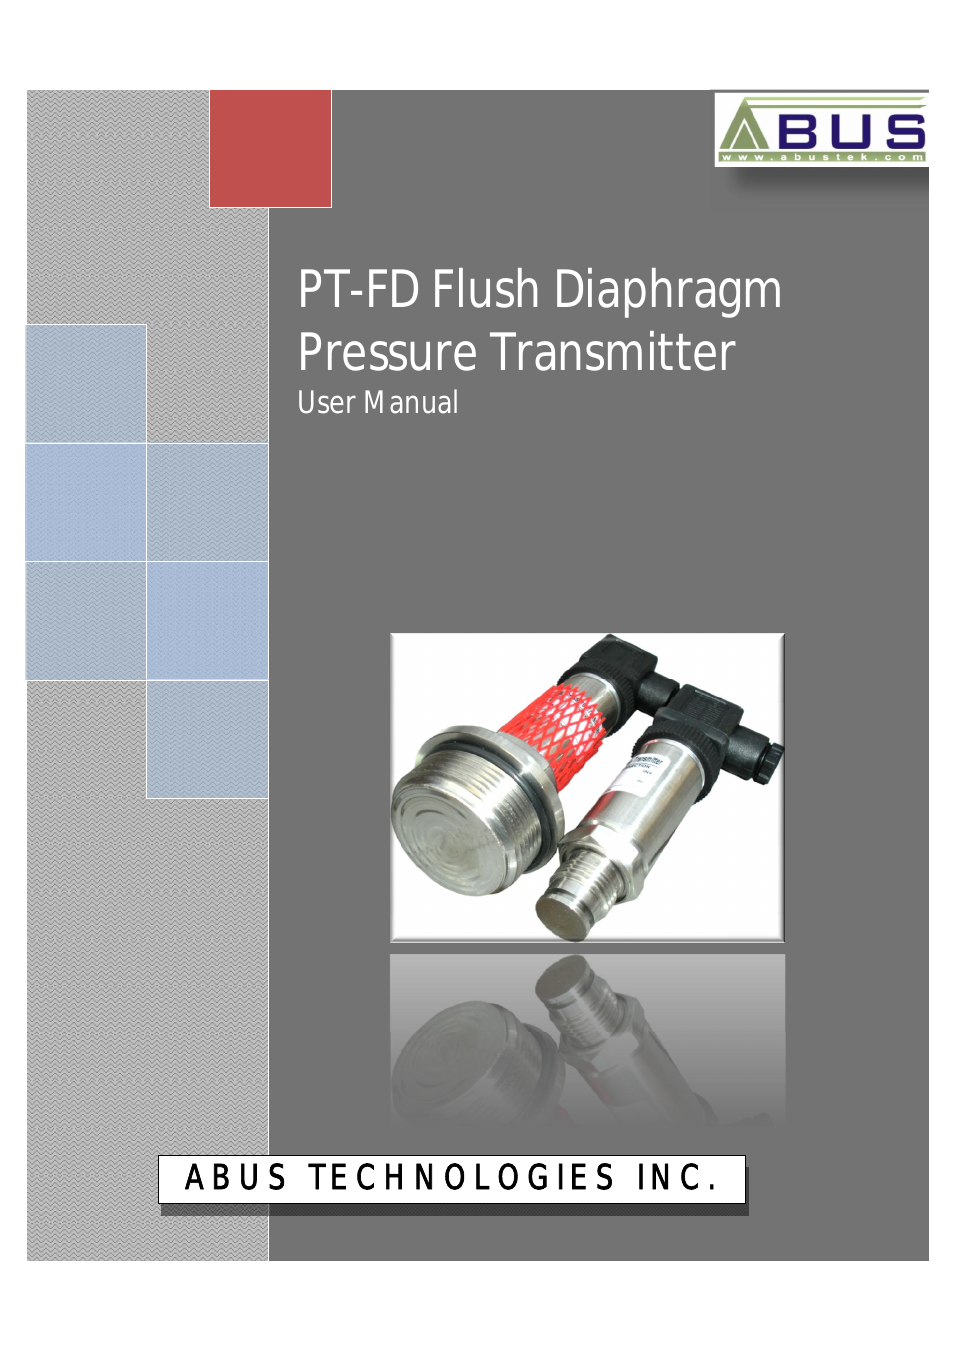 PT-FD Series Pressure Transmitter